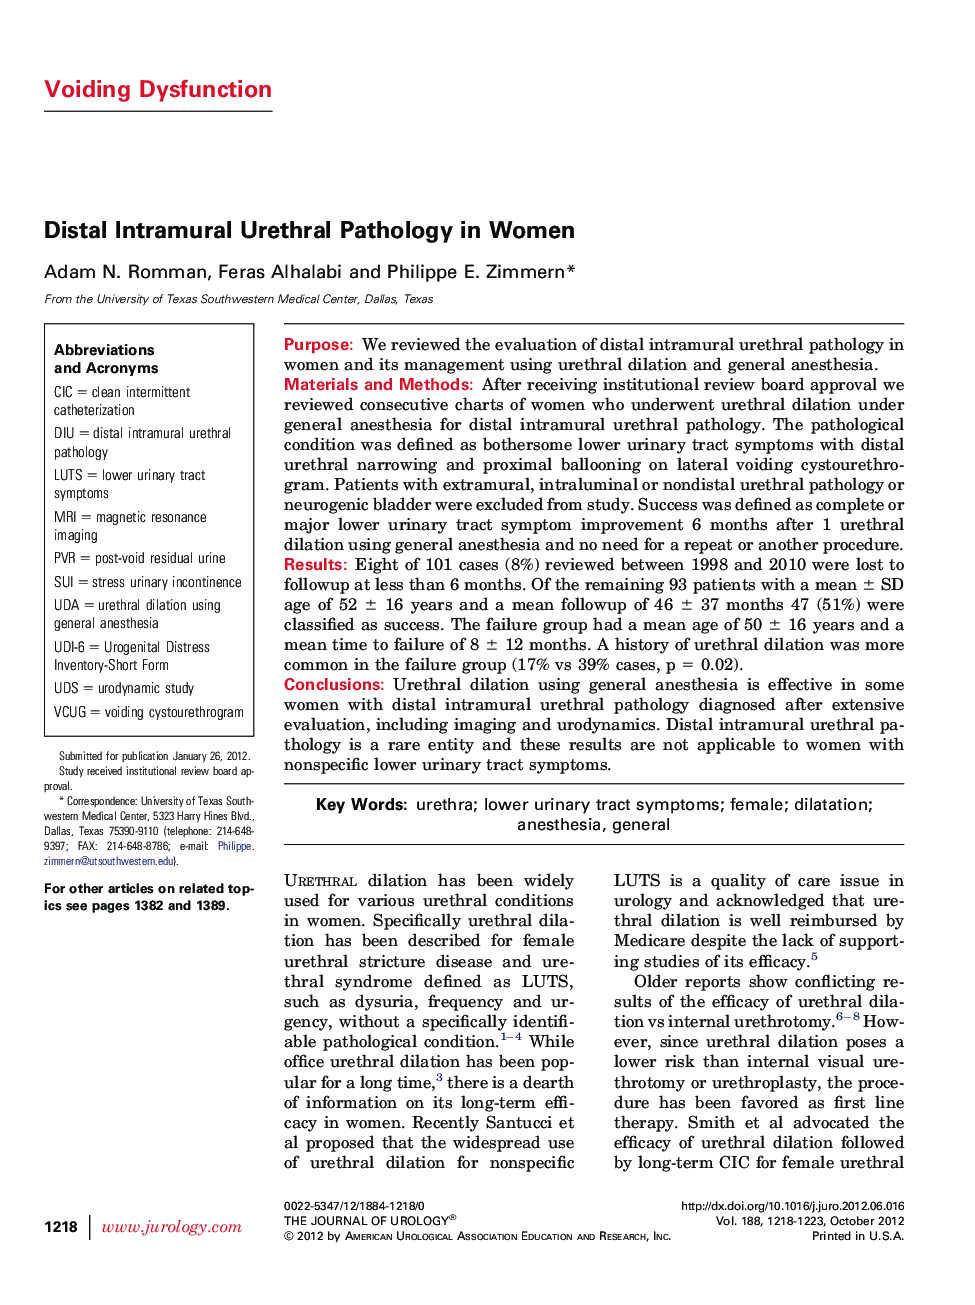 Distal Intramural Urethral Pathology in Women